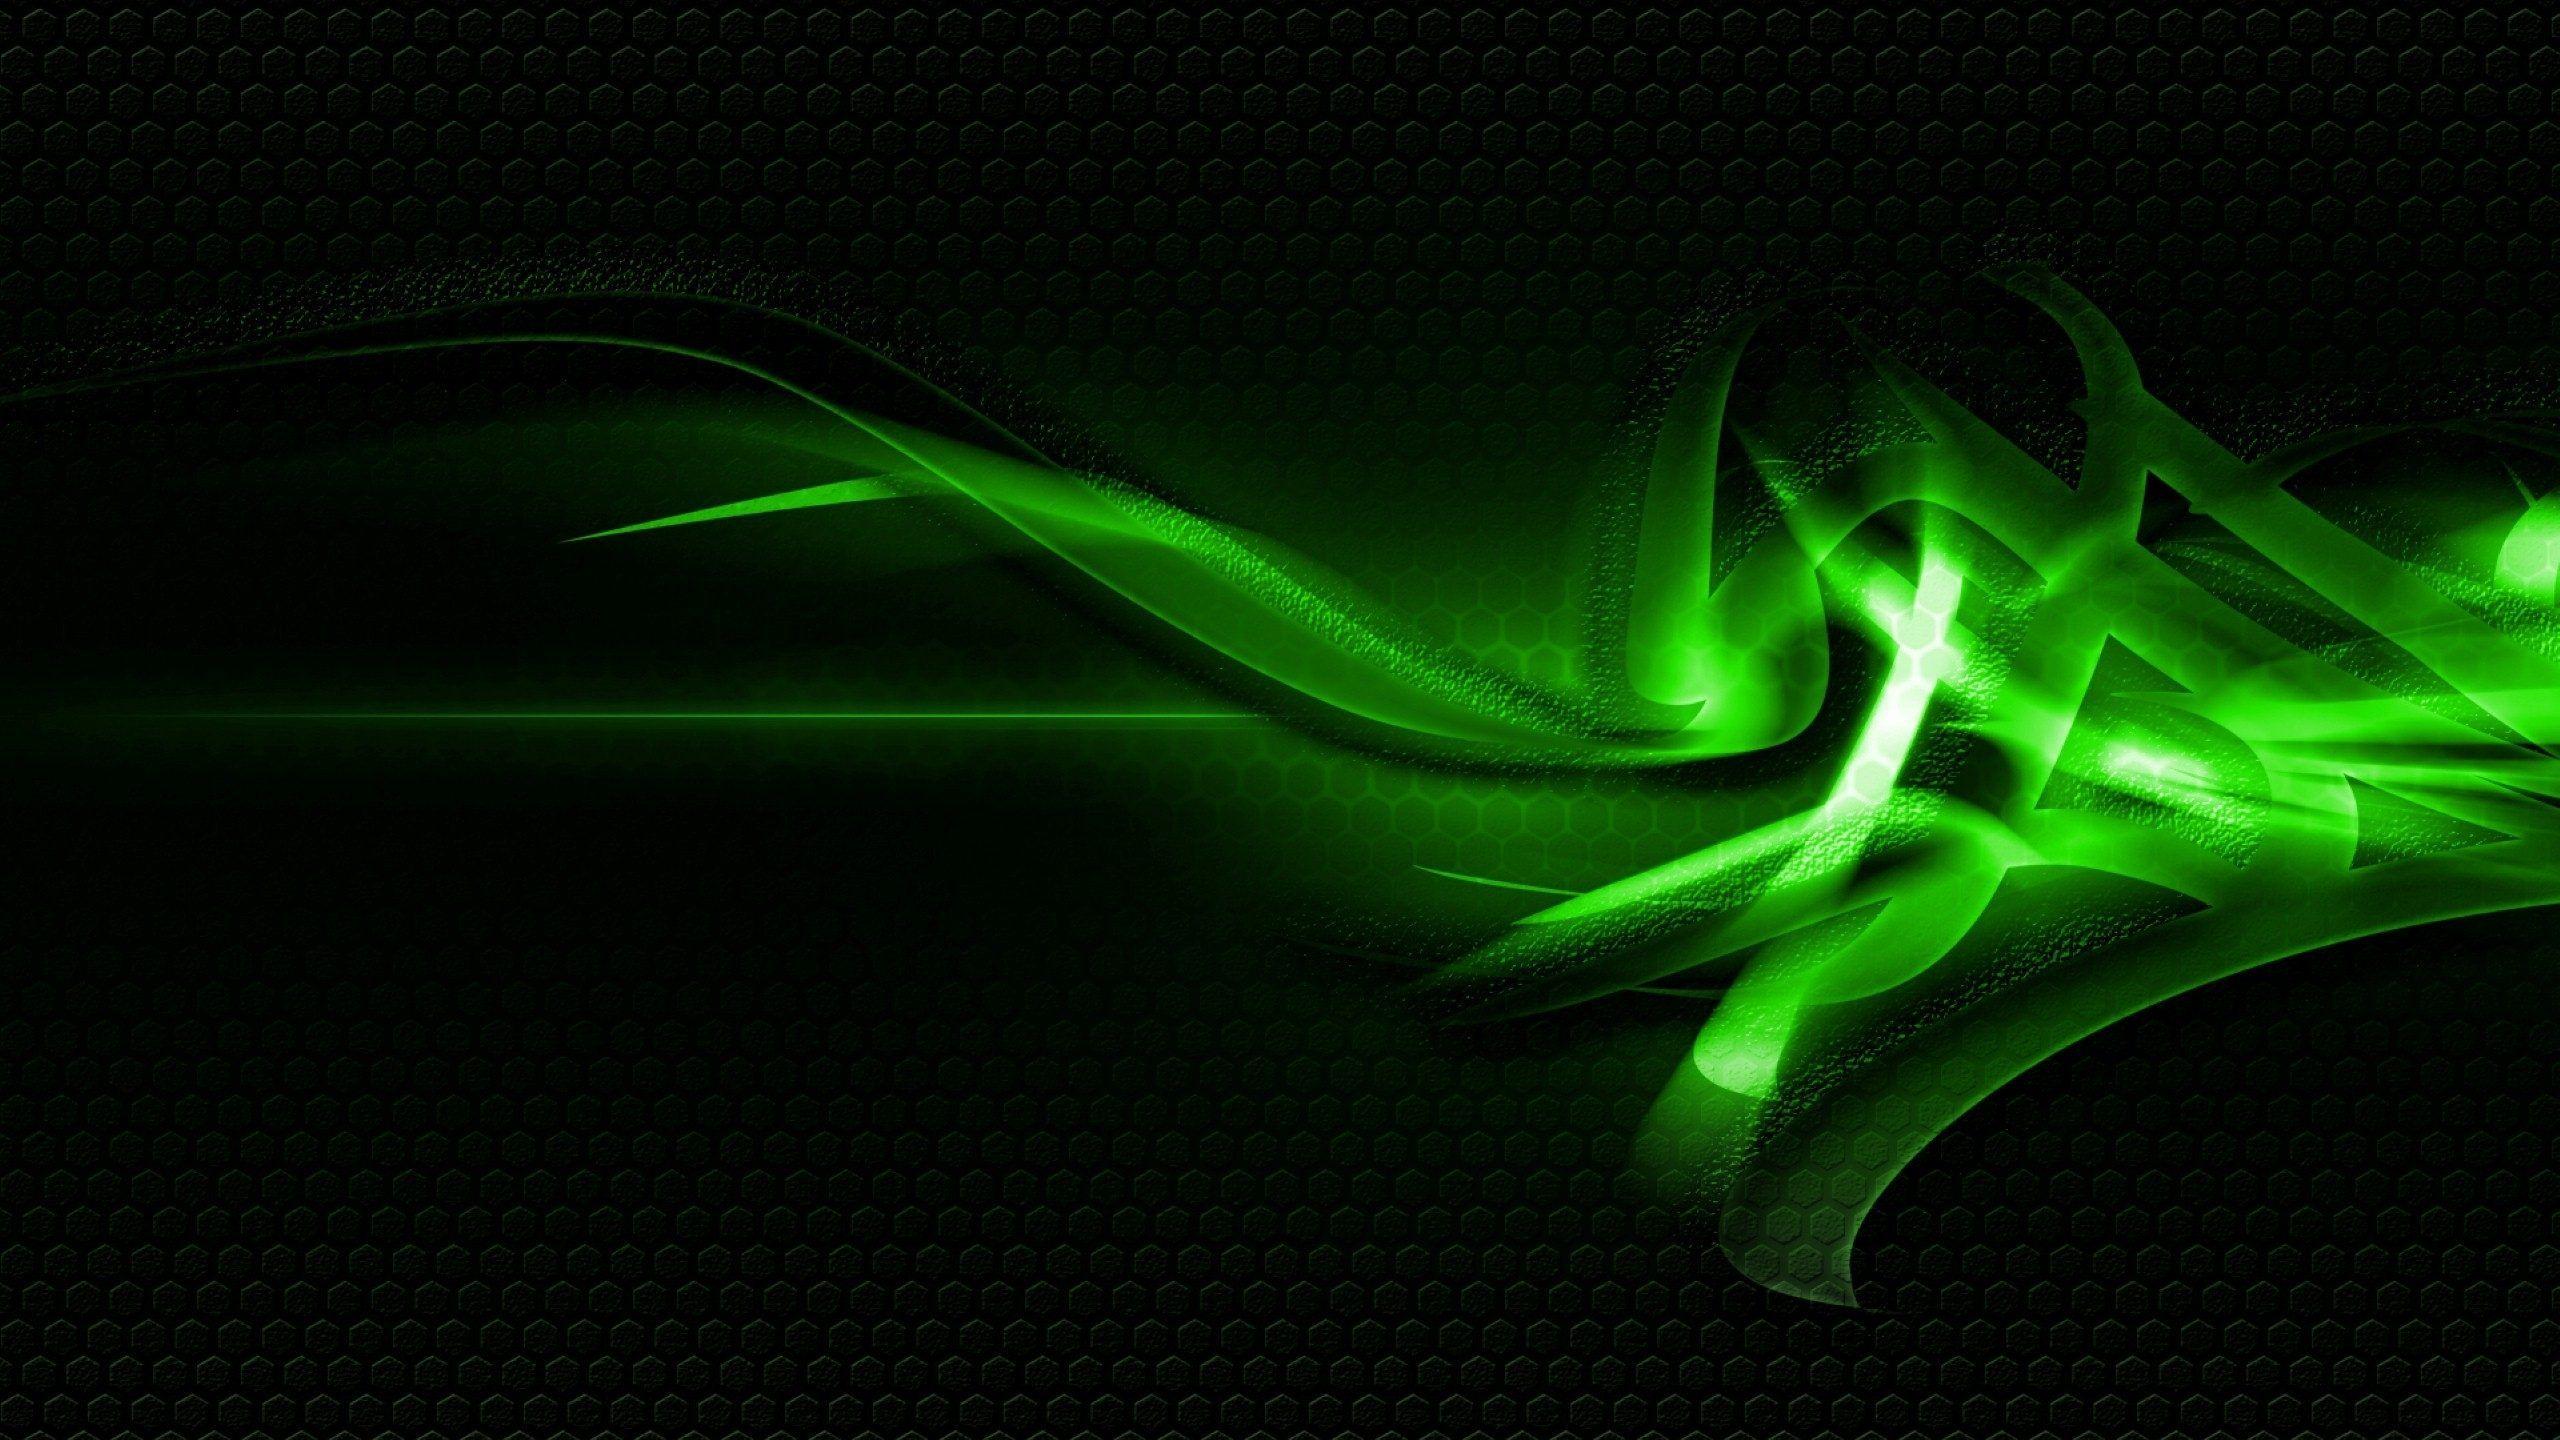 Wallpaper.wiki Green Neon Image PIC WPD005521